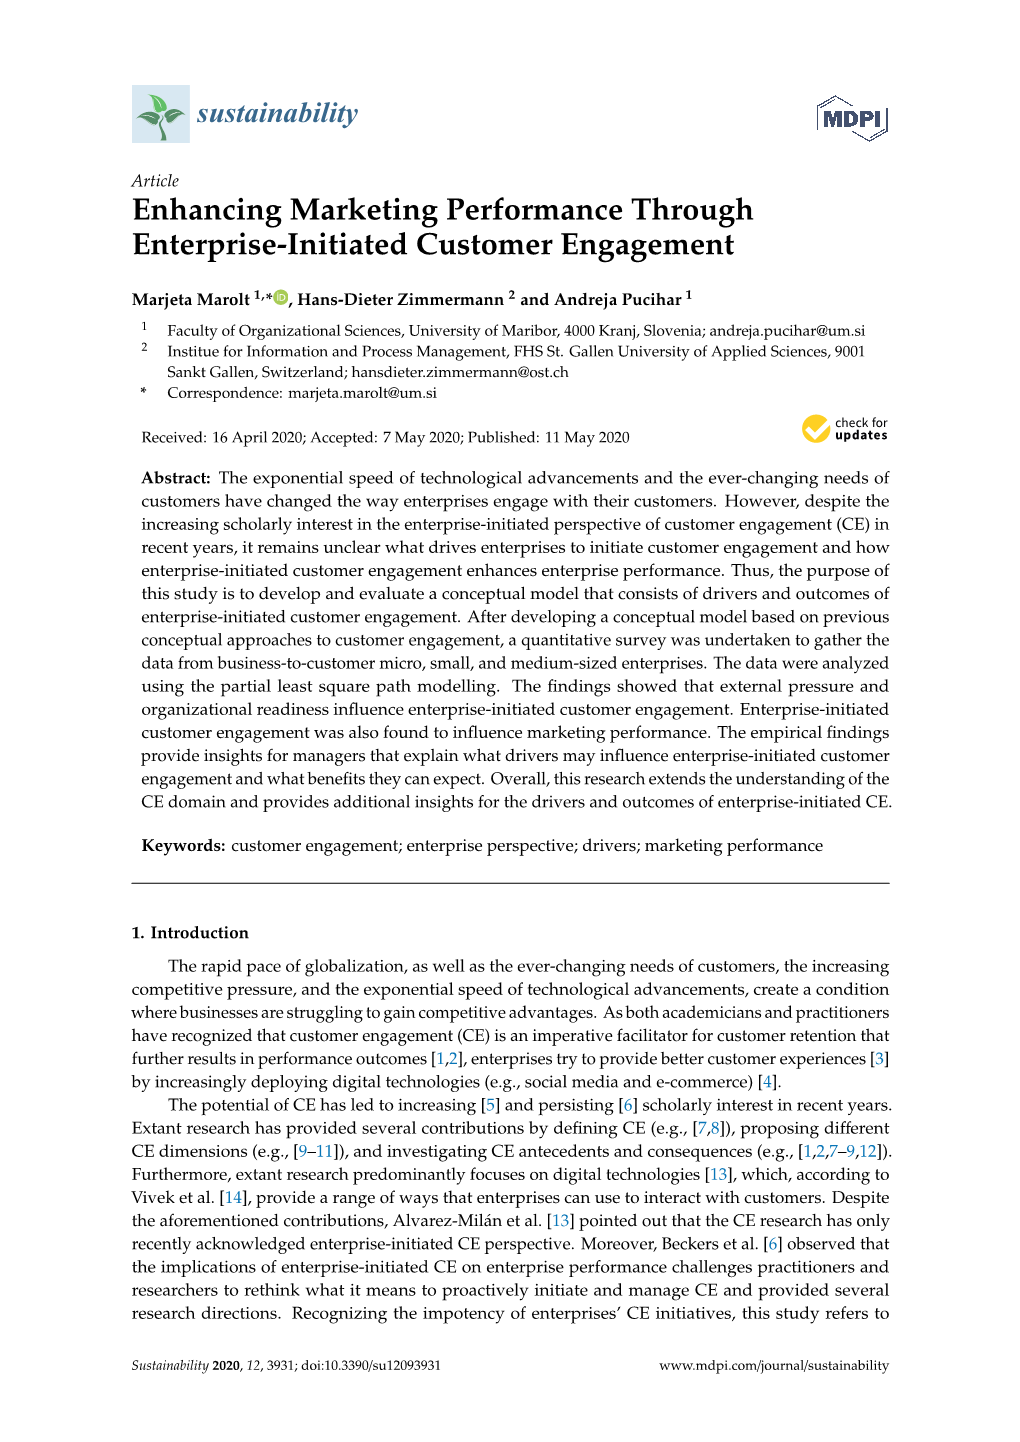 Enhancing Marketing Performance Through Enterprise-Initiated Customer Engagement